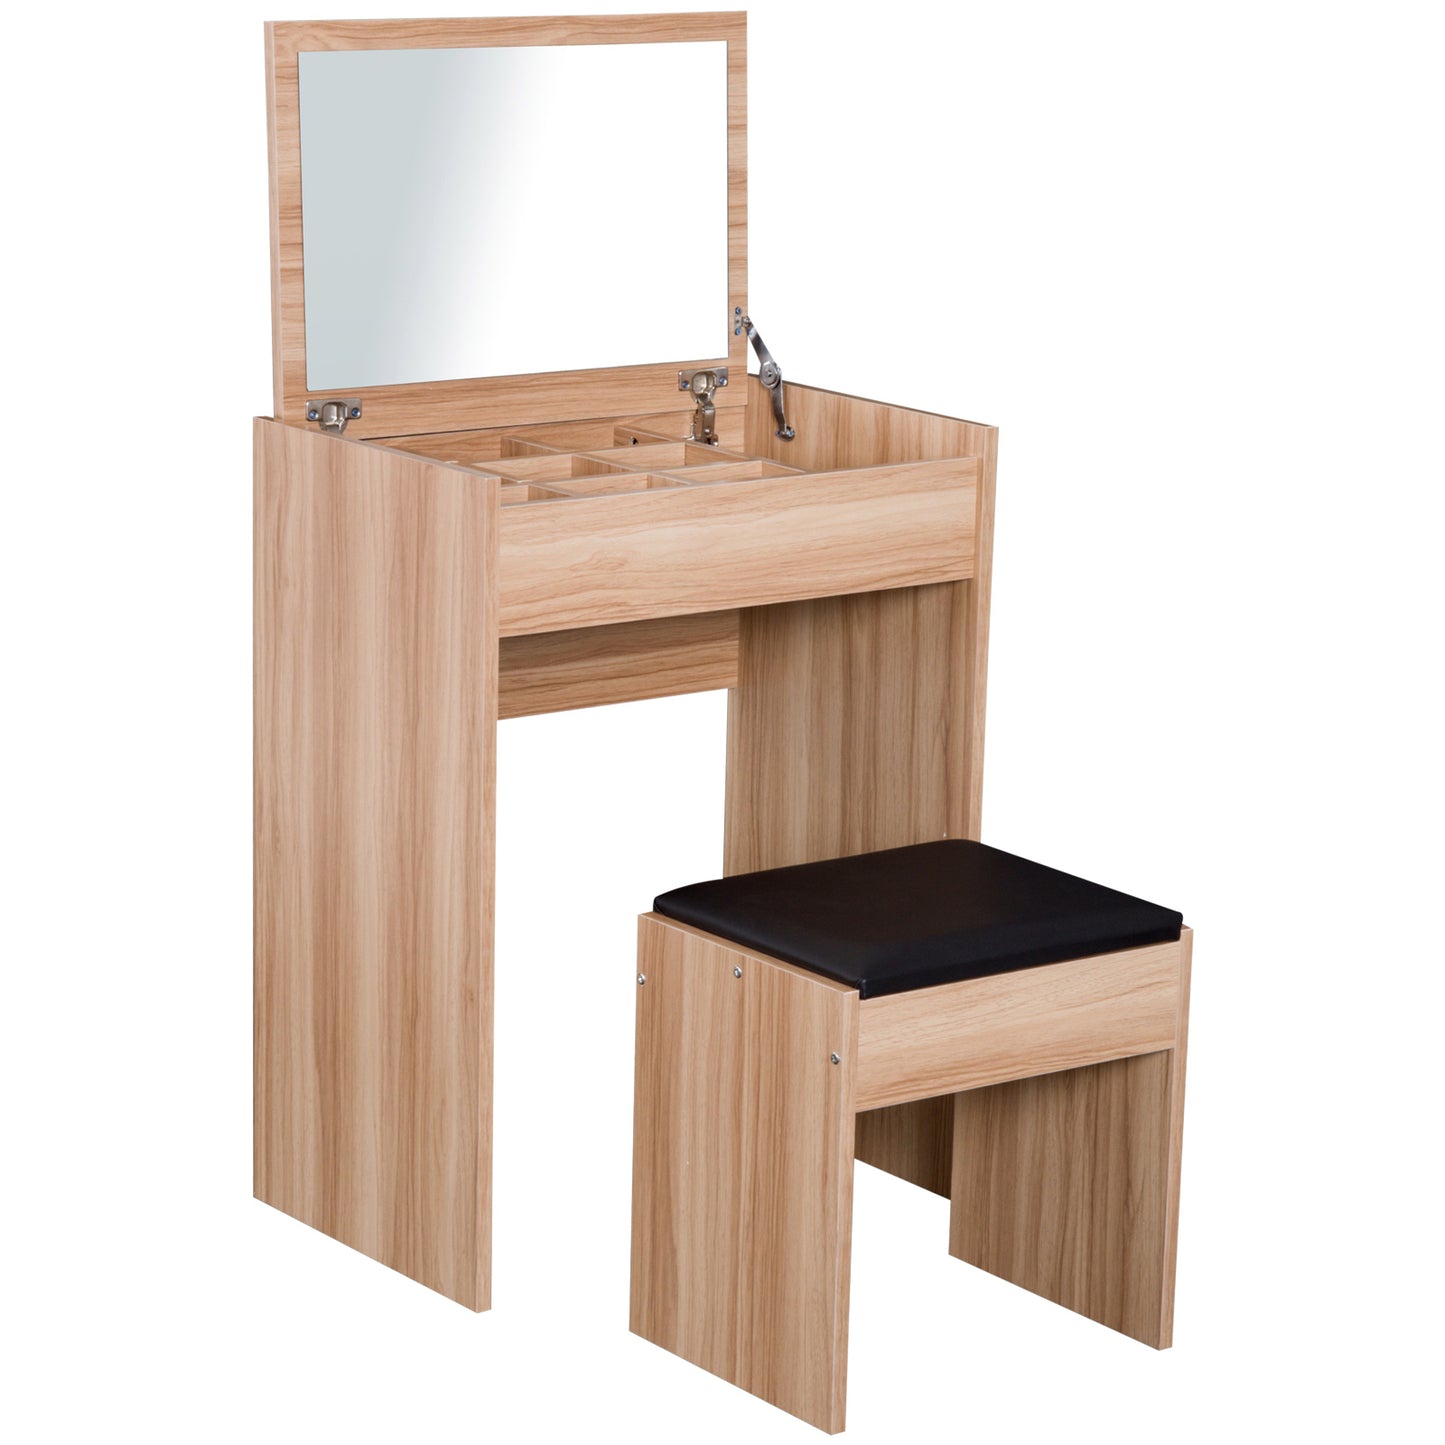 HOMCOM Dressing Table Set with Mirror & Stool-Wood Grain Colour